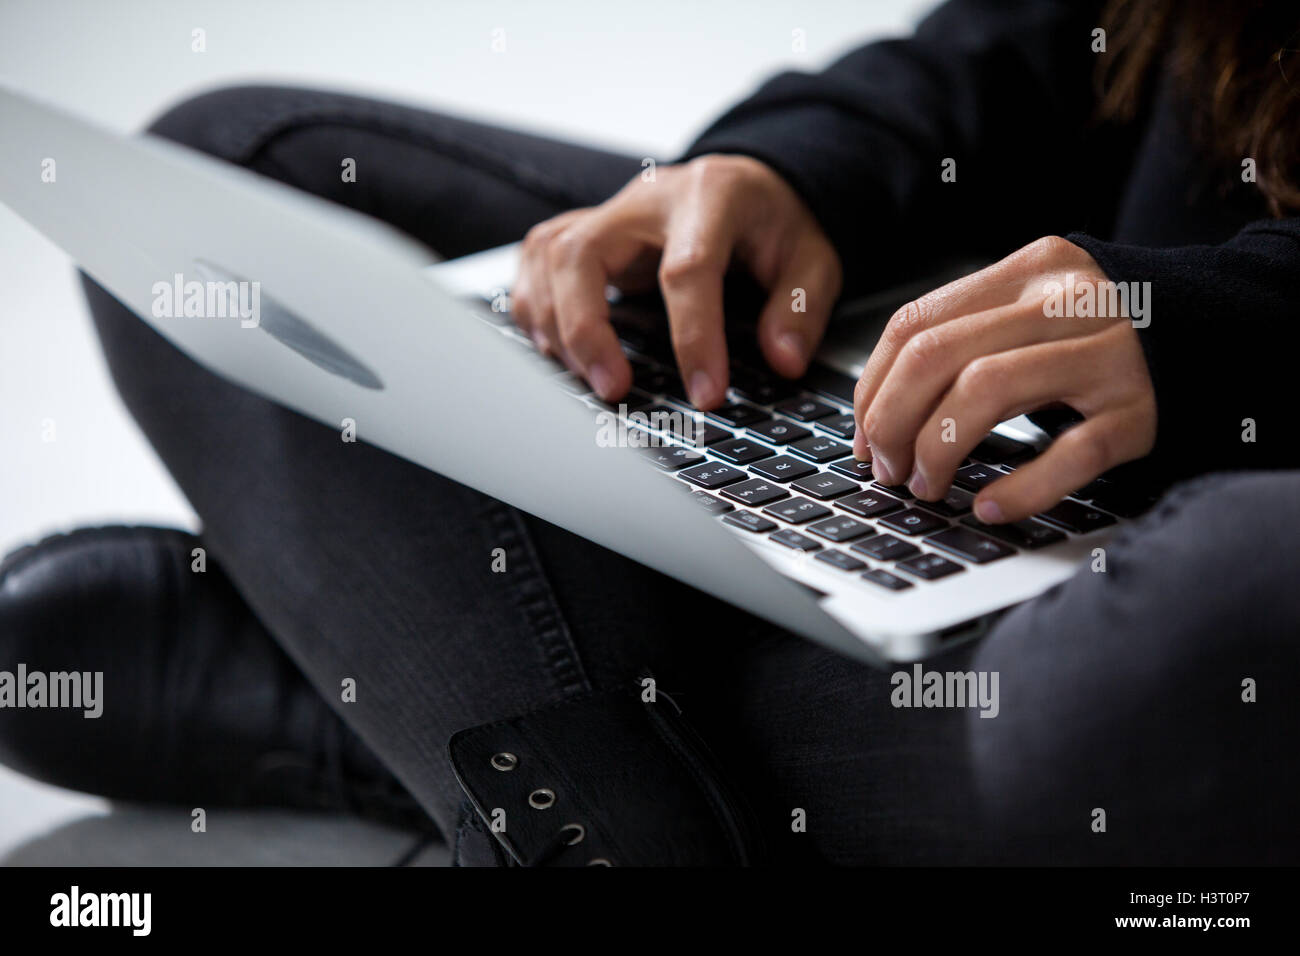 Hacker using a laptop Stock Photo